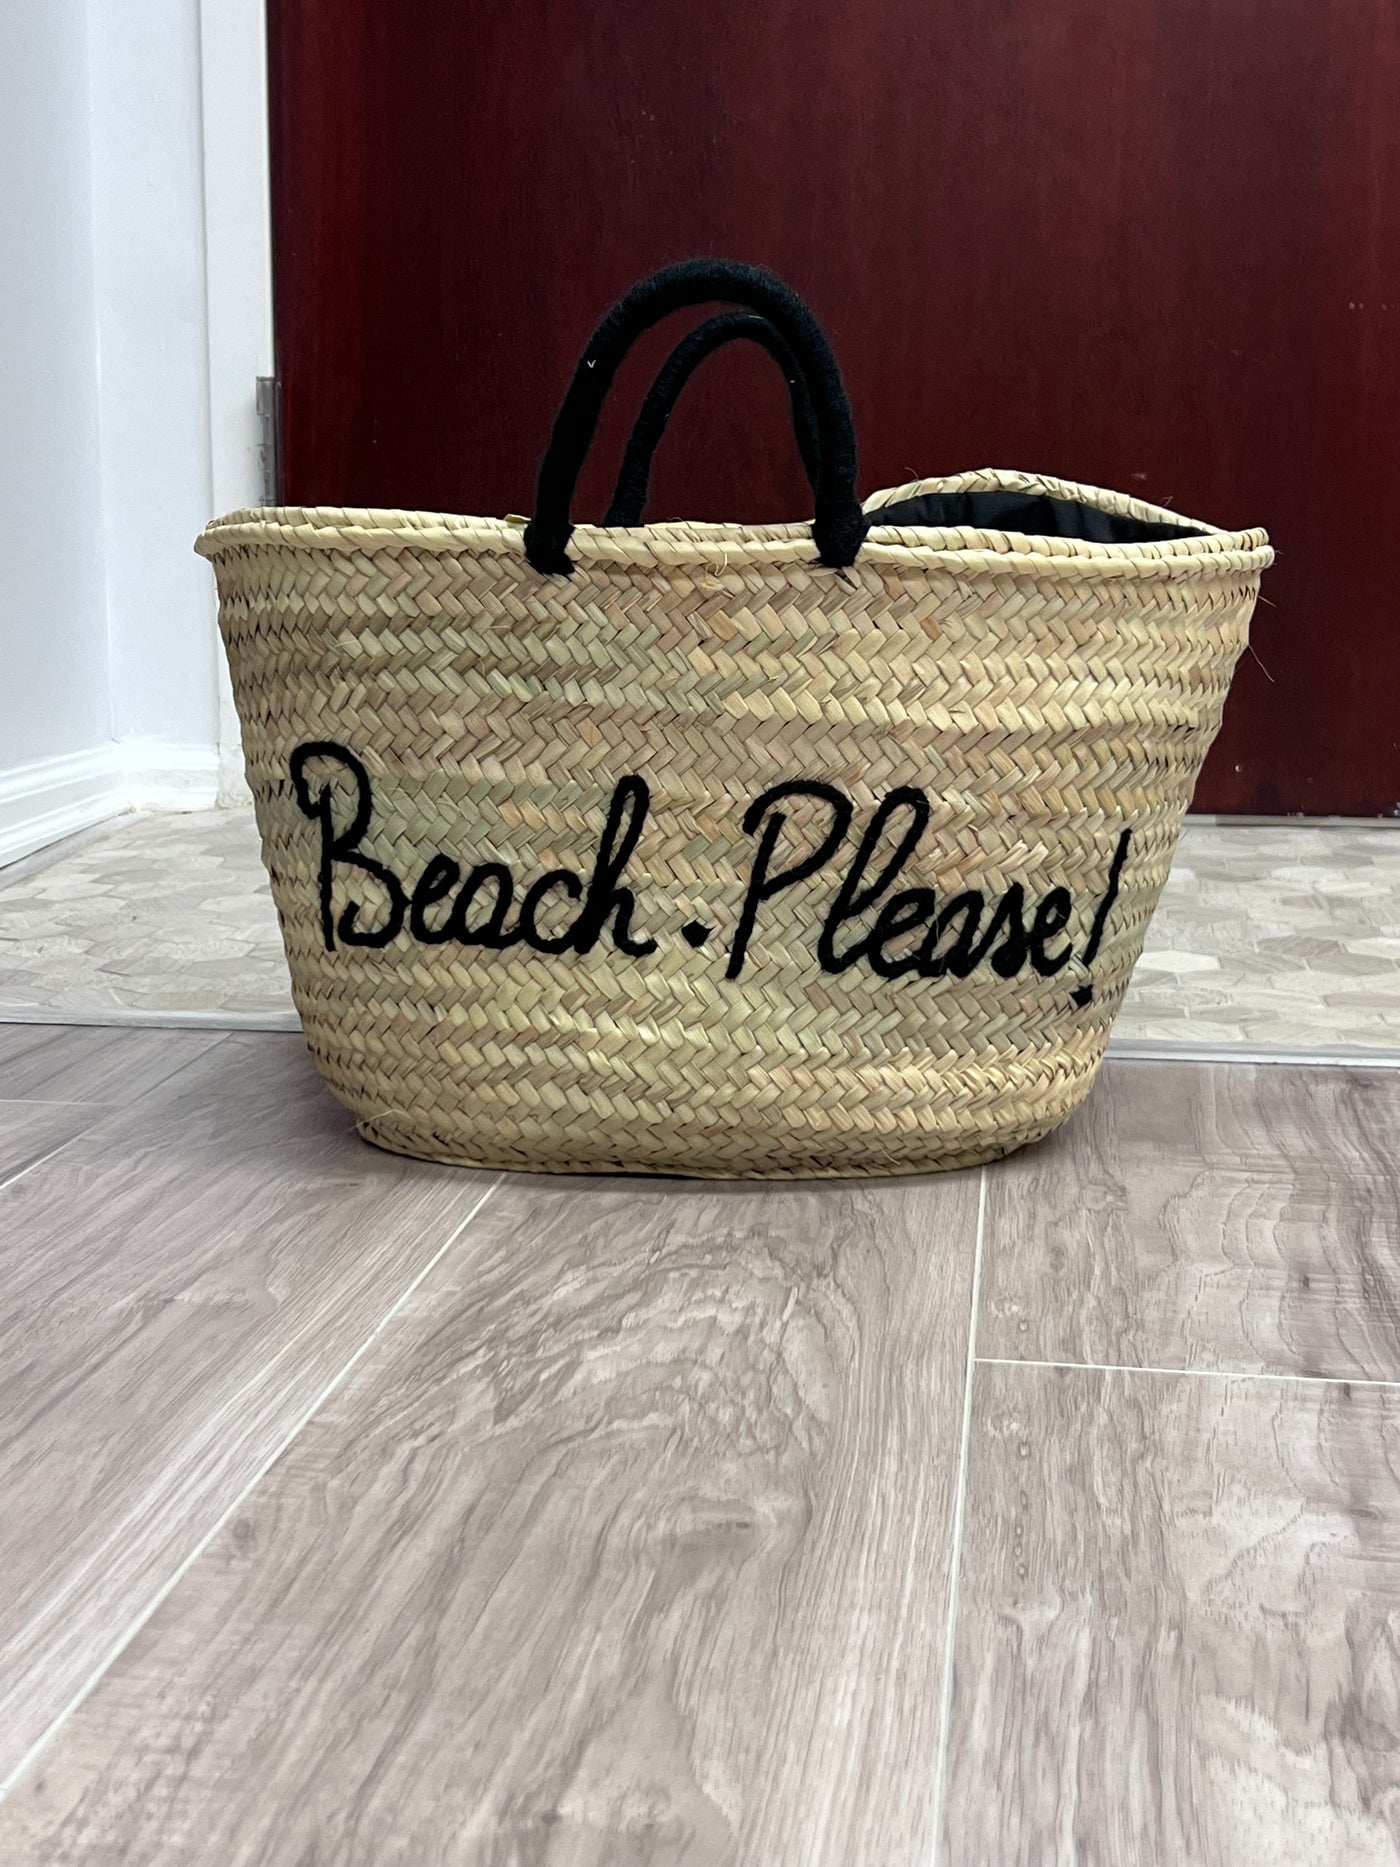 Beach, Please! Straw Tote - Shop Habb